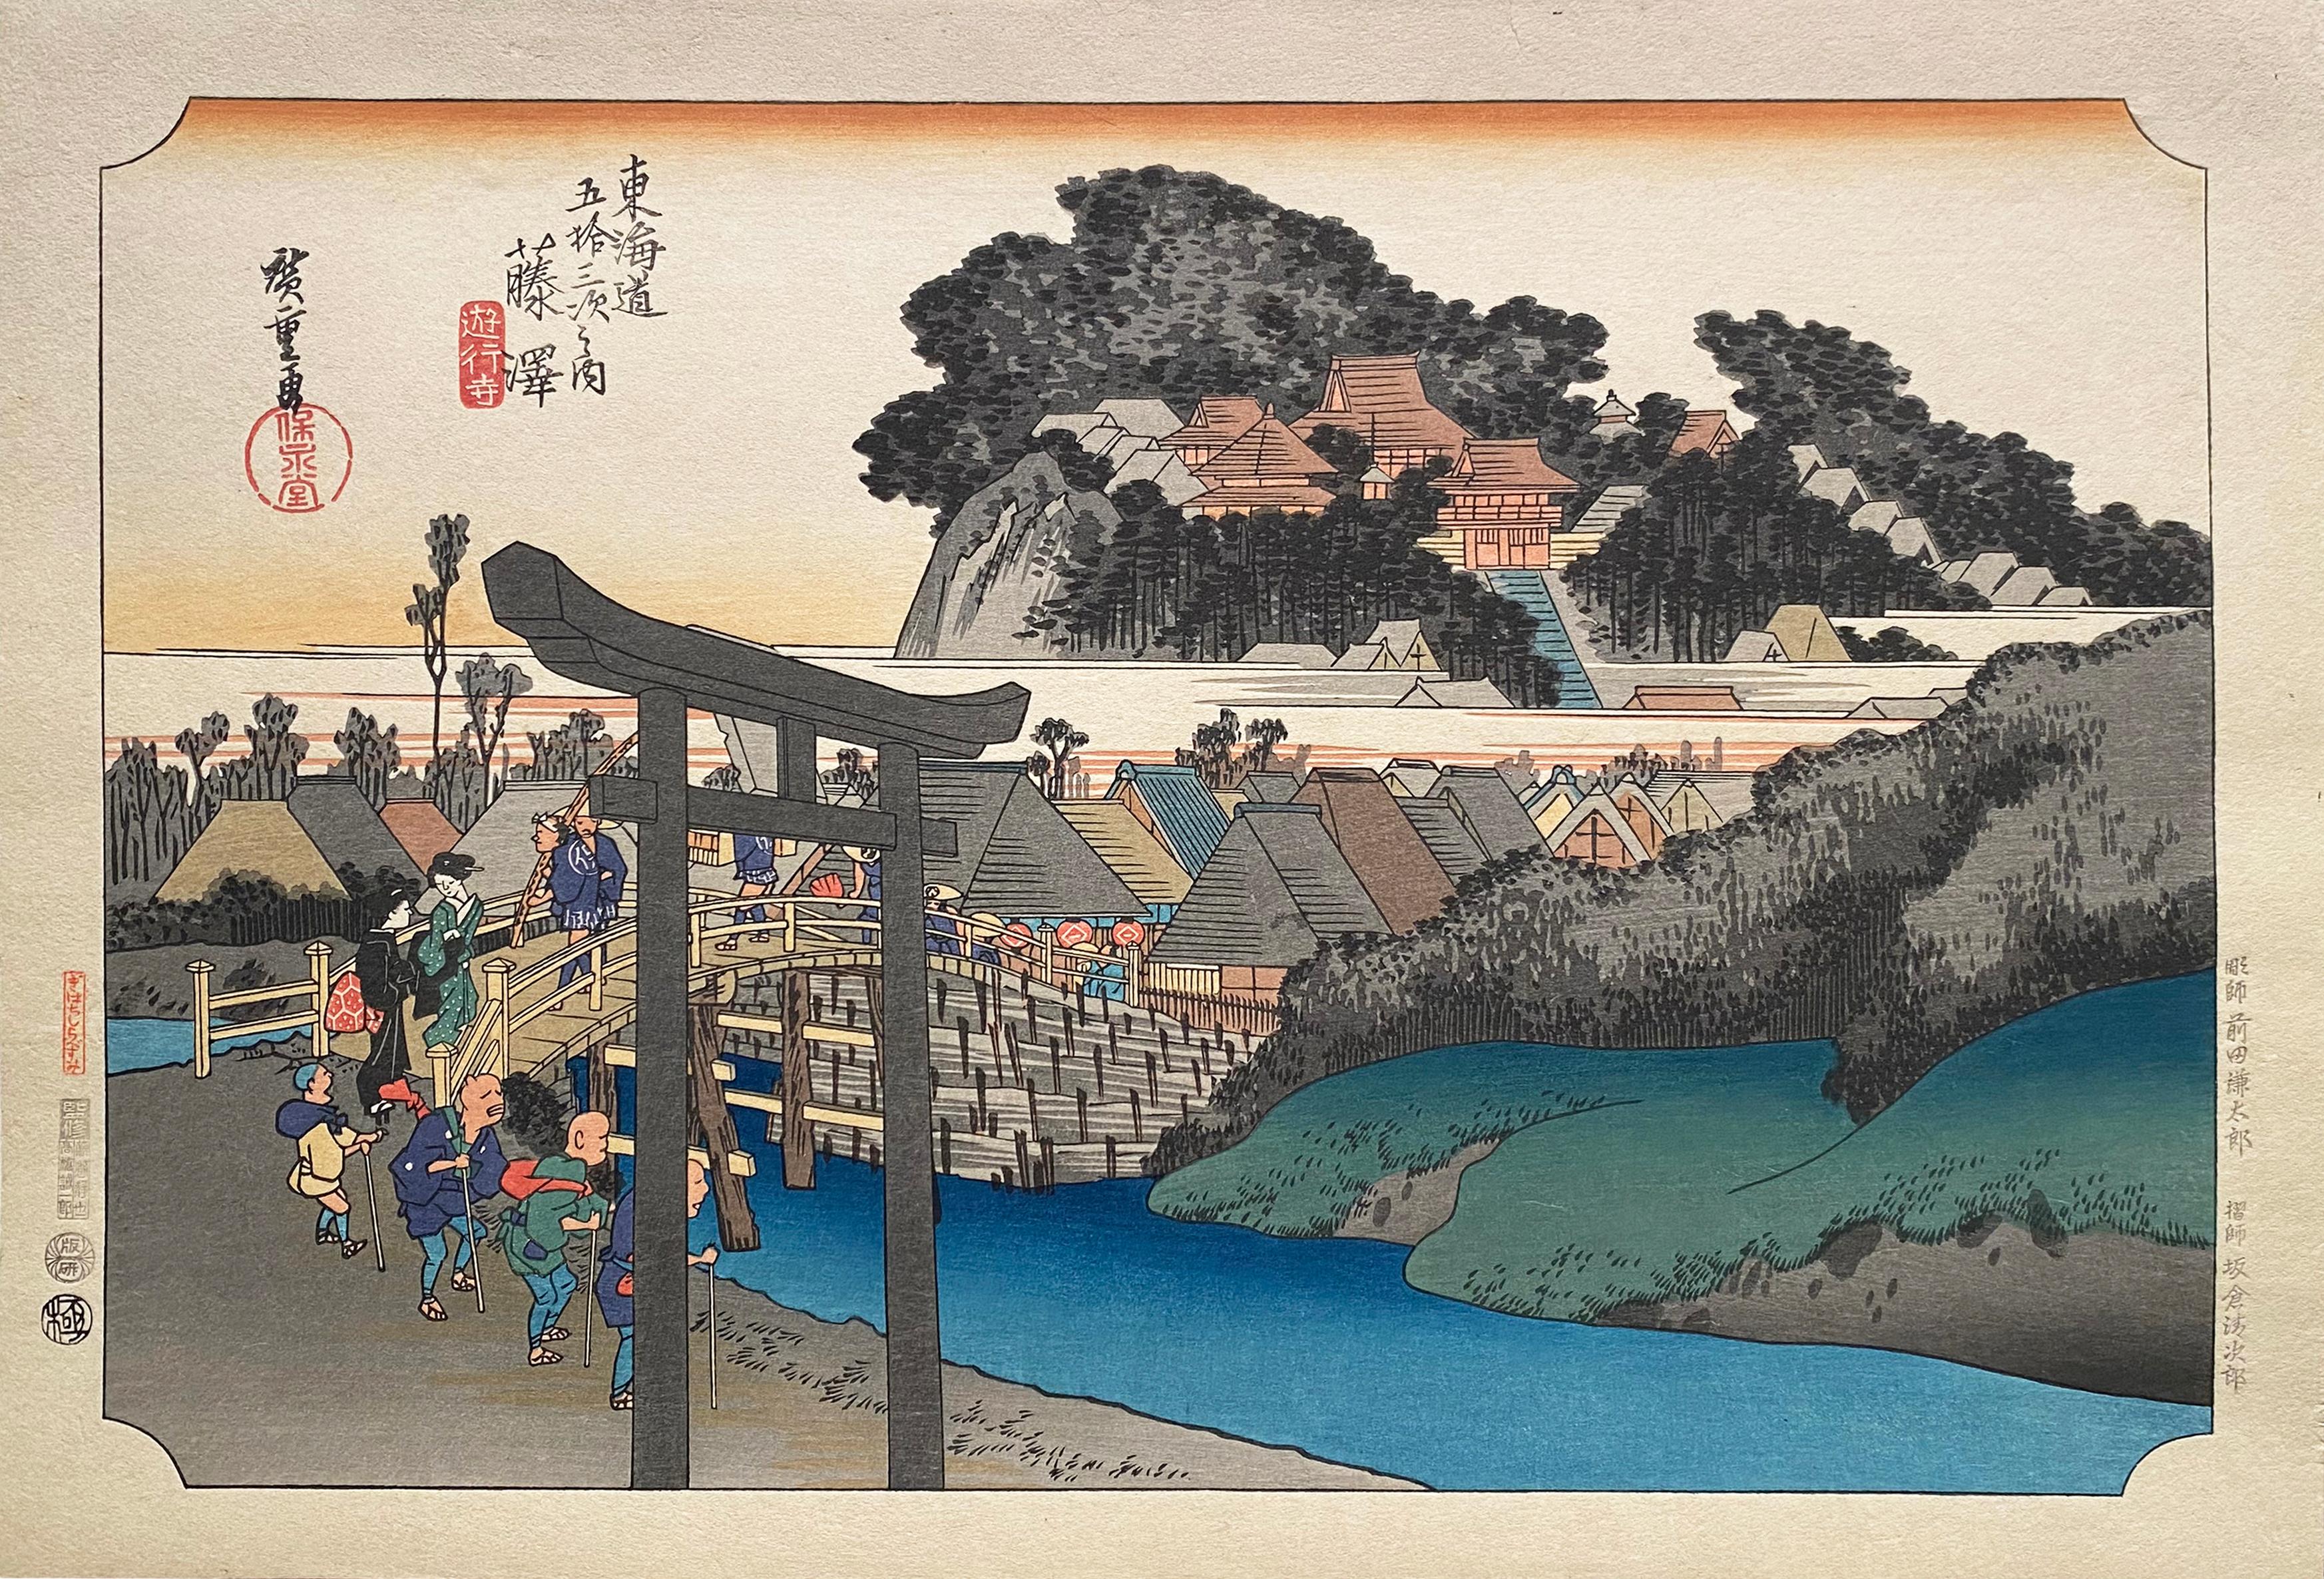 Utagawa Hiroshige (Ando Hiroshige) Landscape Print – Ansicht von Fujisawa", nach Utagawa Hiroshige 歌川廣重, Ukiyo-e Holzschnitt, Tokaido